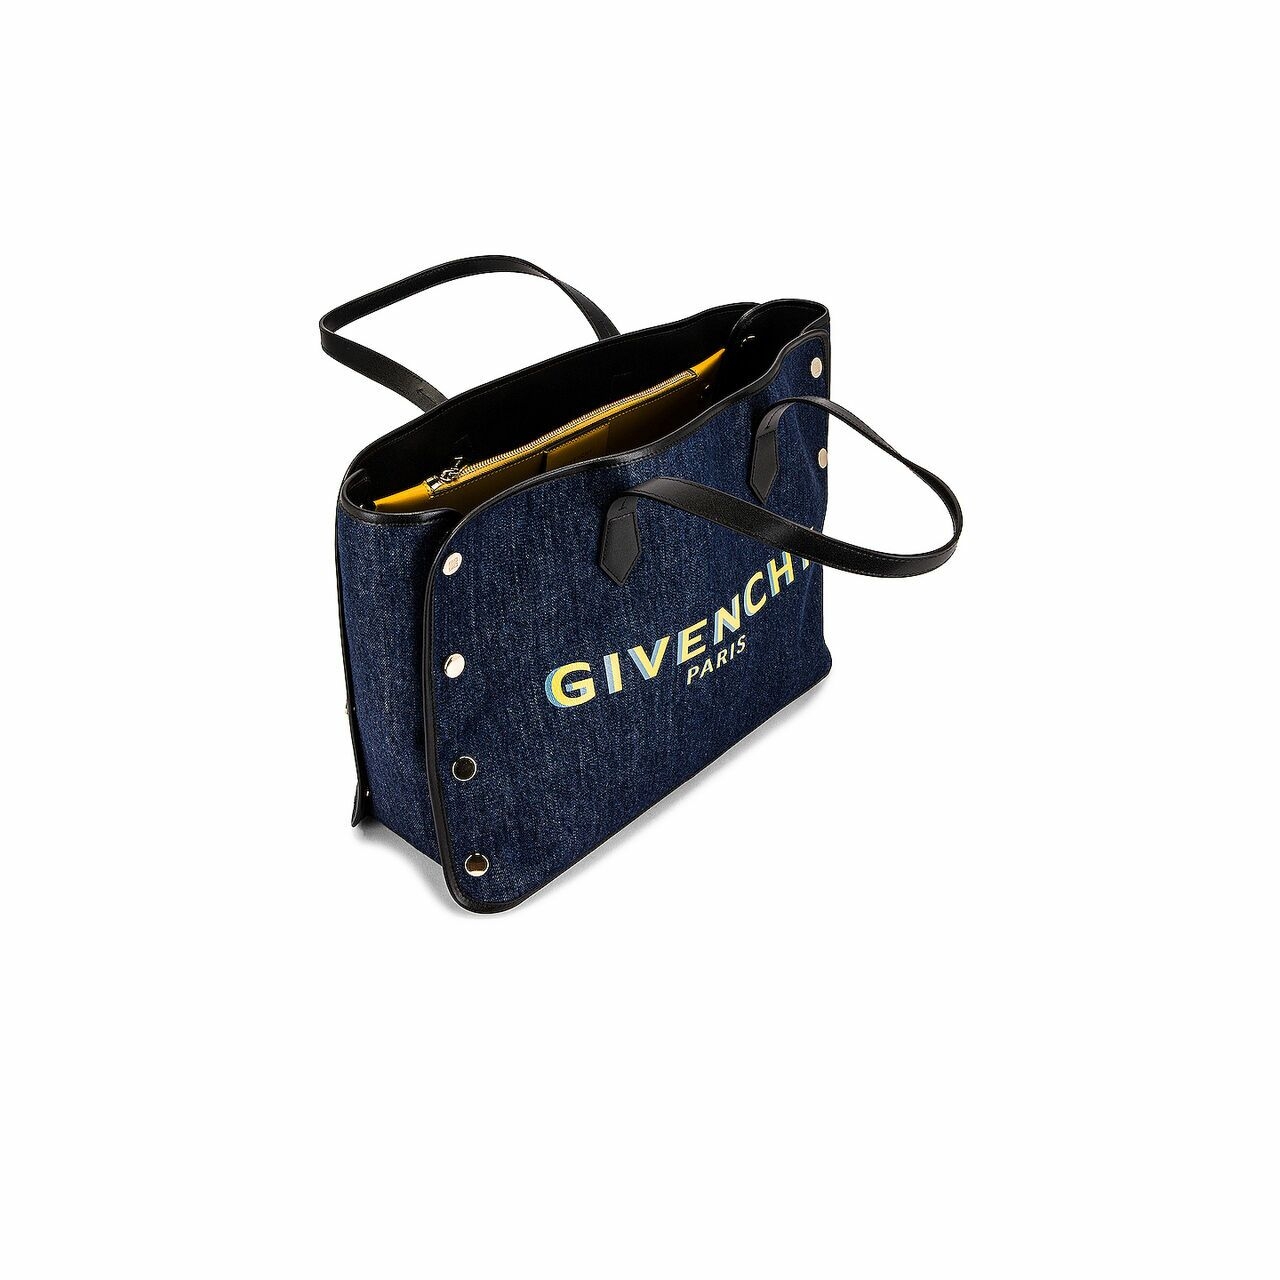 Givenchy Blue Tote Bag